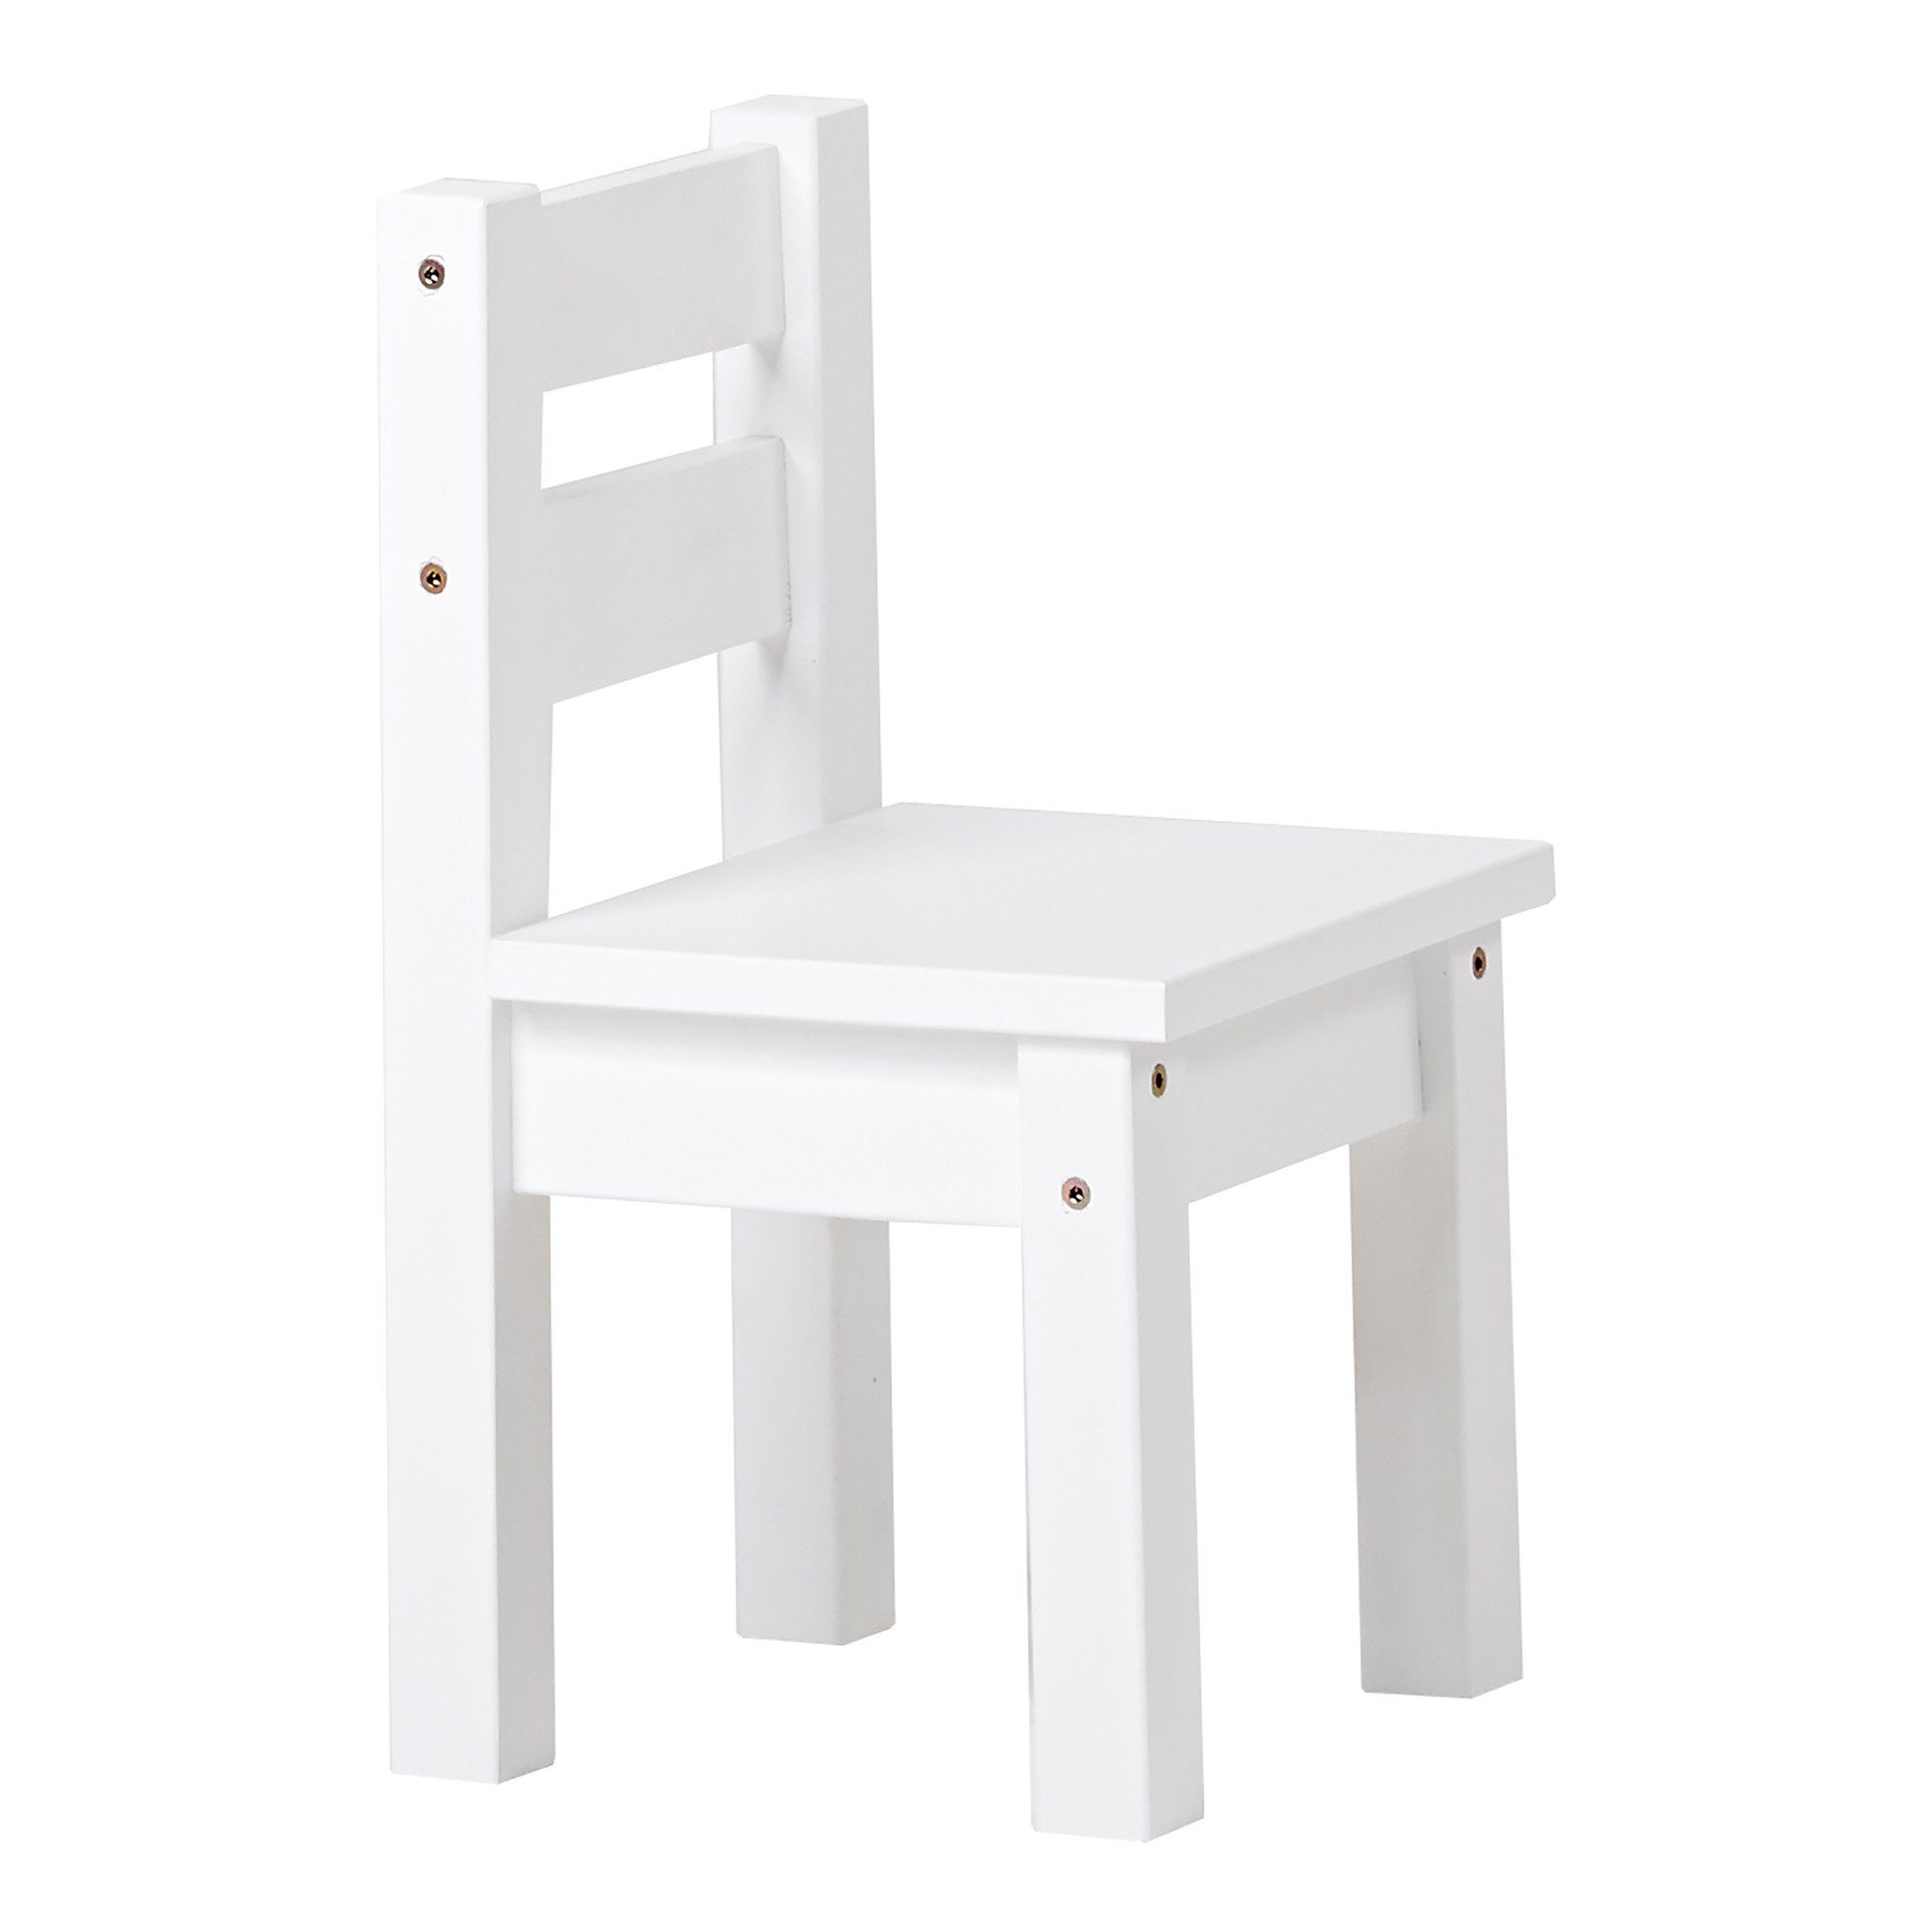 MDF-Holz massivem Stuhl Kinderstuhl Hoppekids Kiefernholz und MADS Weiß aus